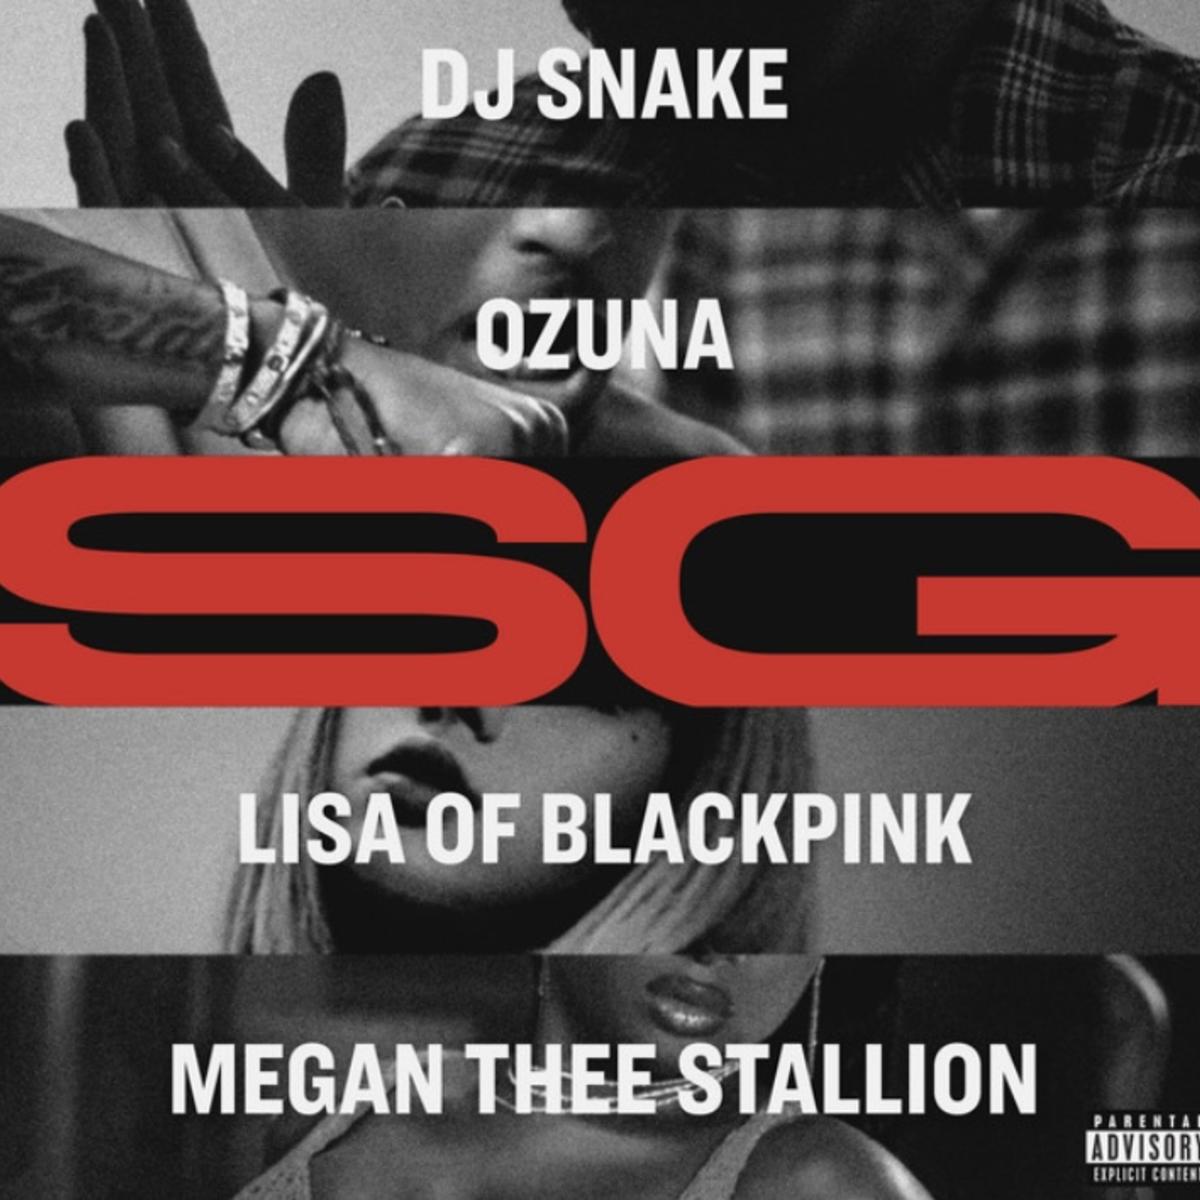 DJ Snake, Megan Thee Stallion, Ozuna & LISA Unite For “SG”